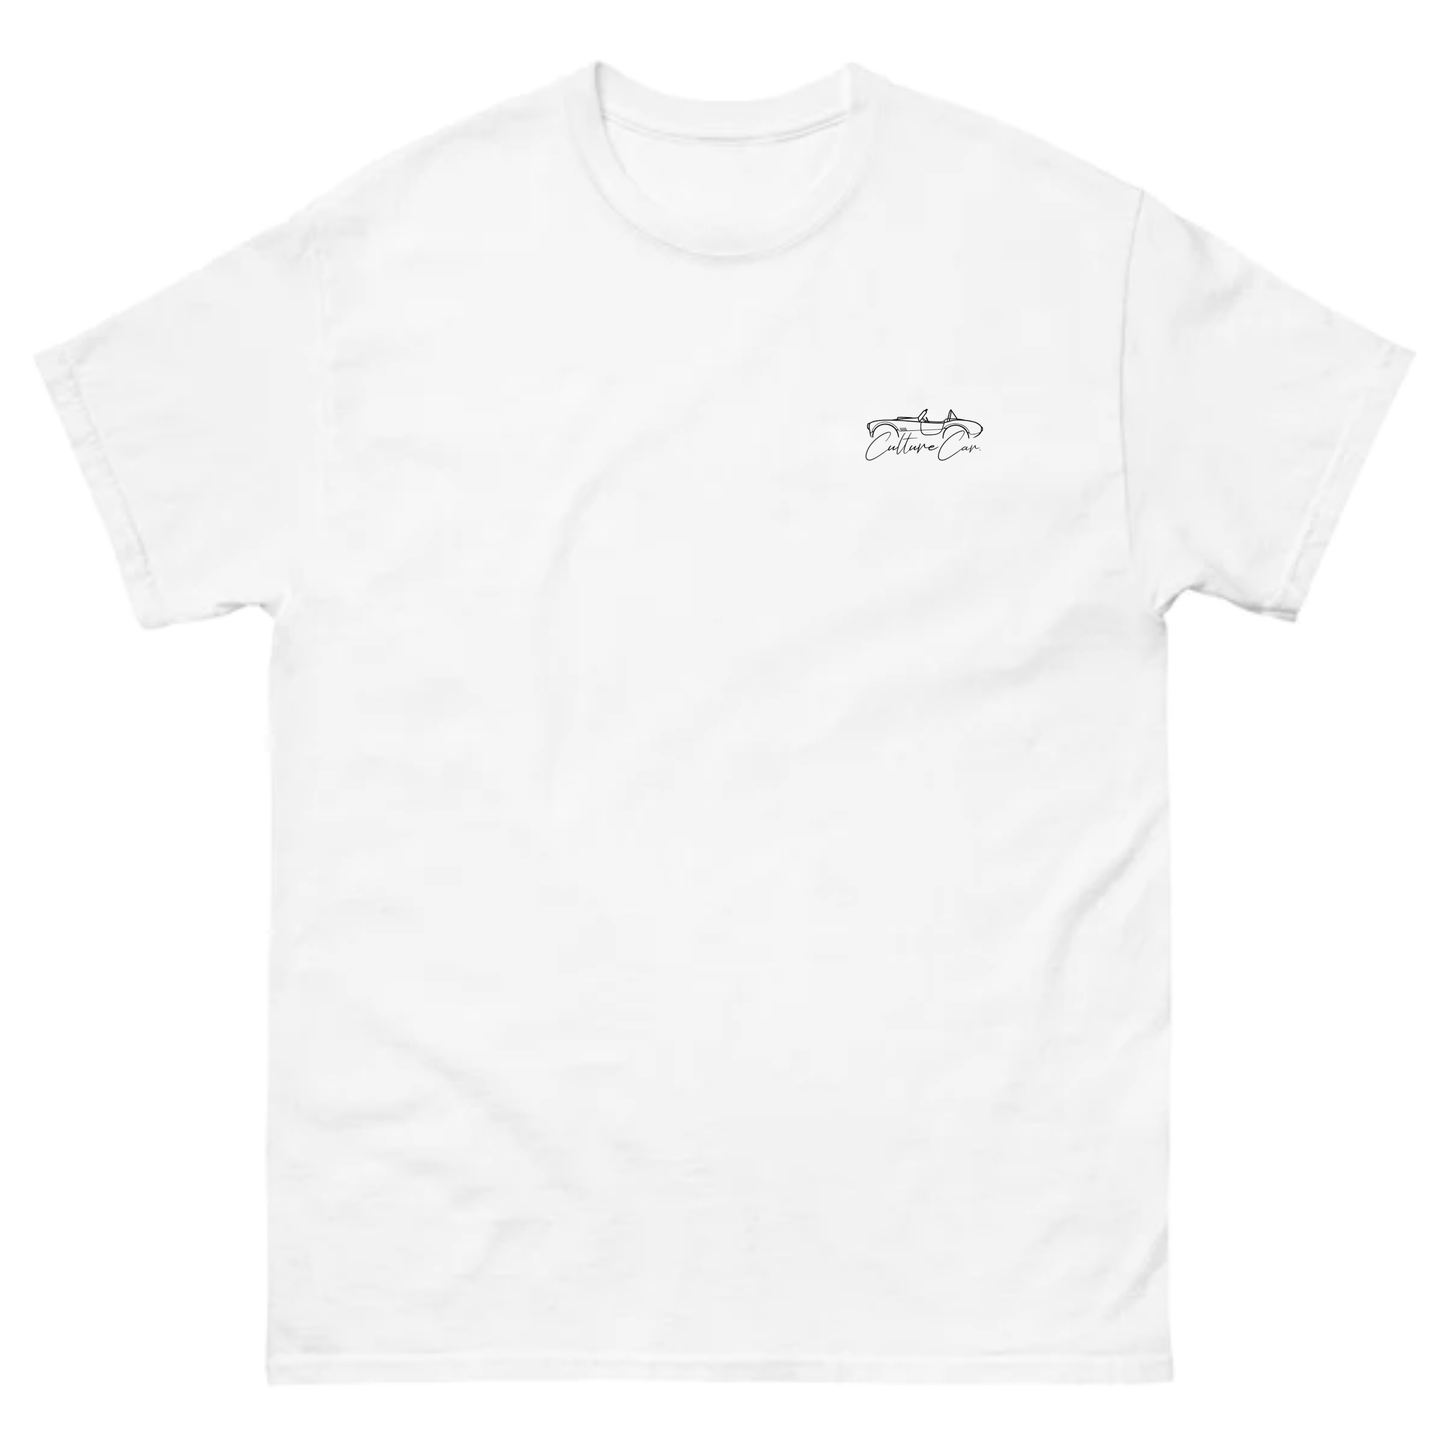 ✎Cobra 427 t-shirt